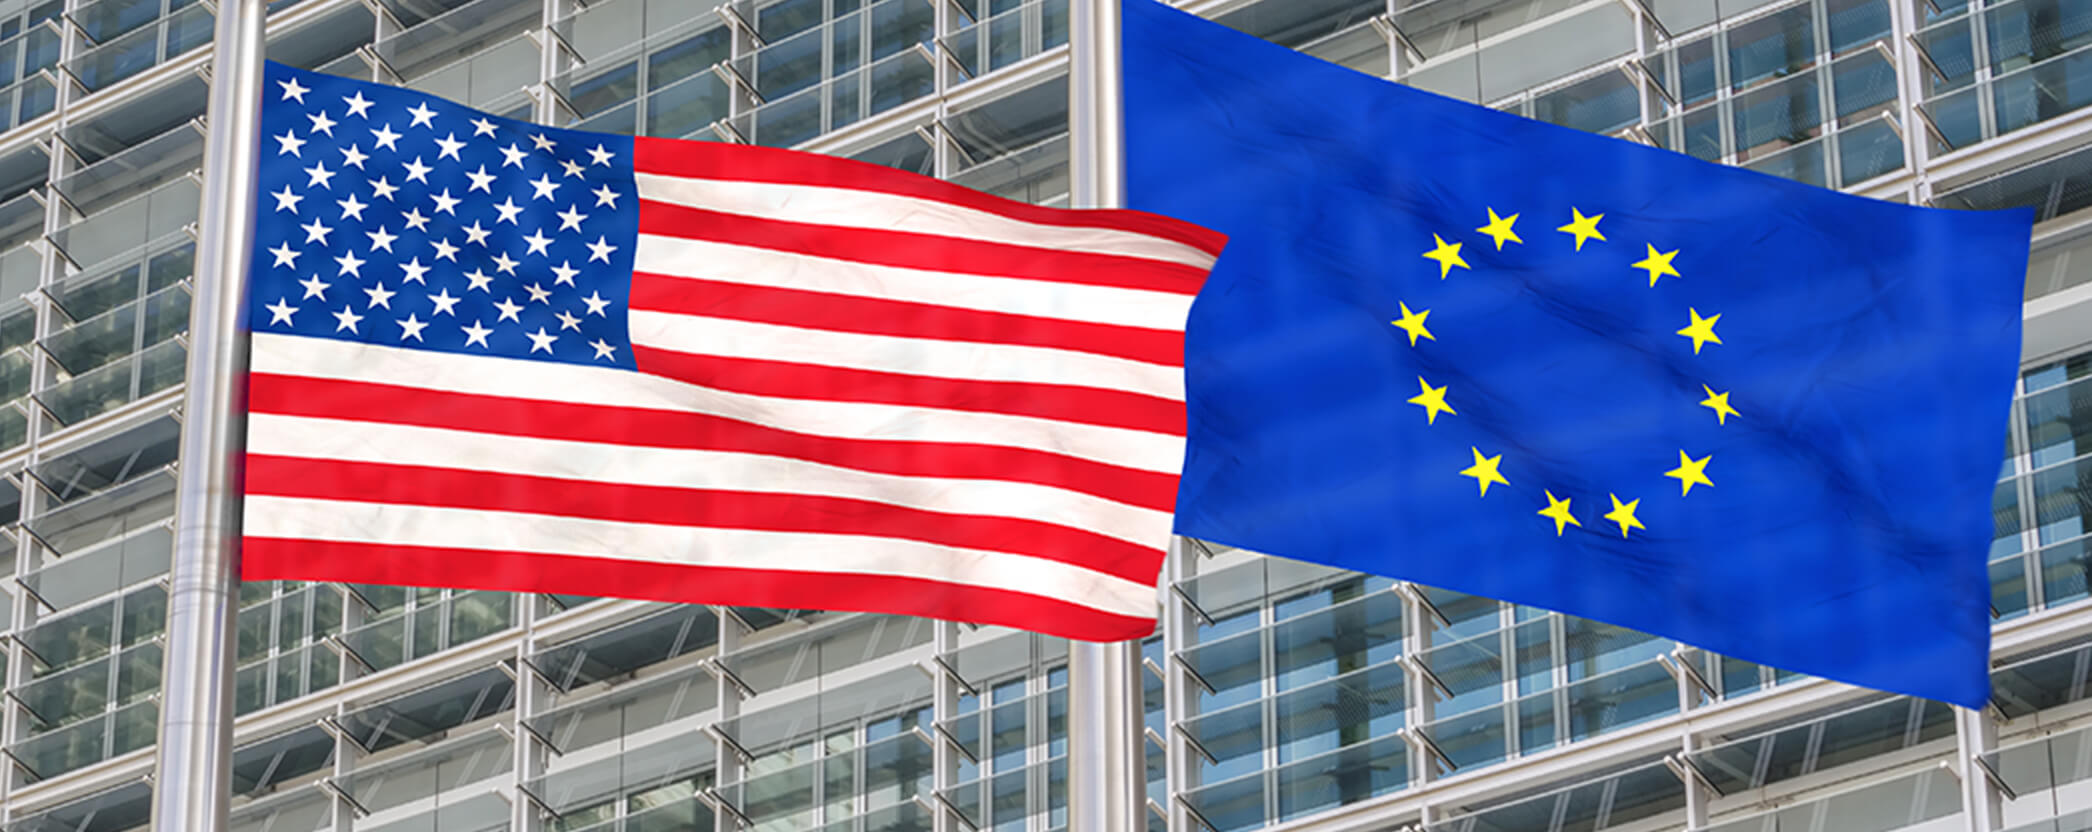 American flag and European Union flag